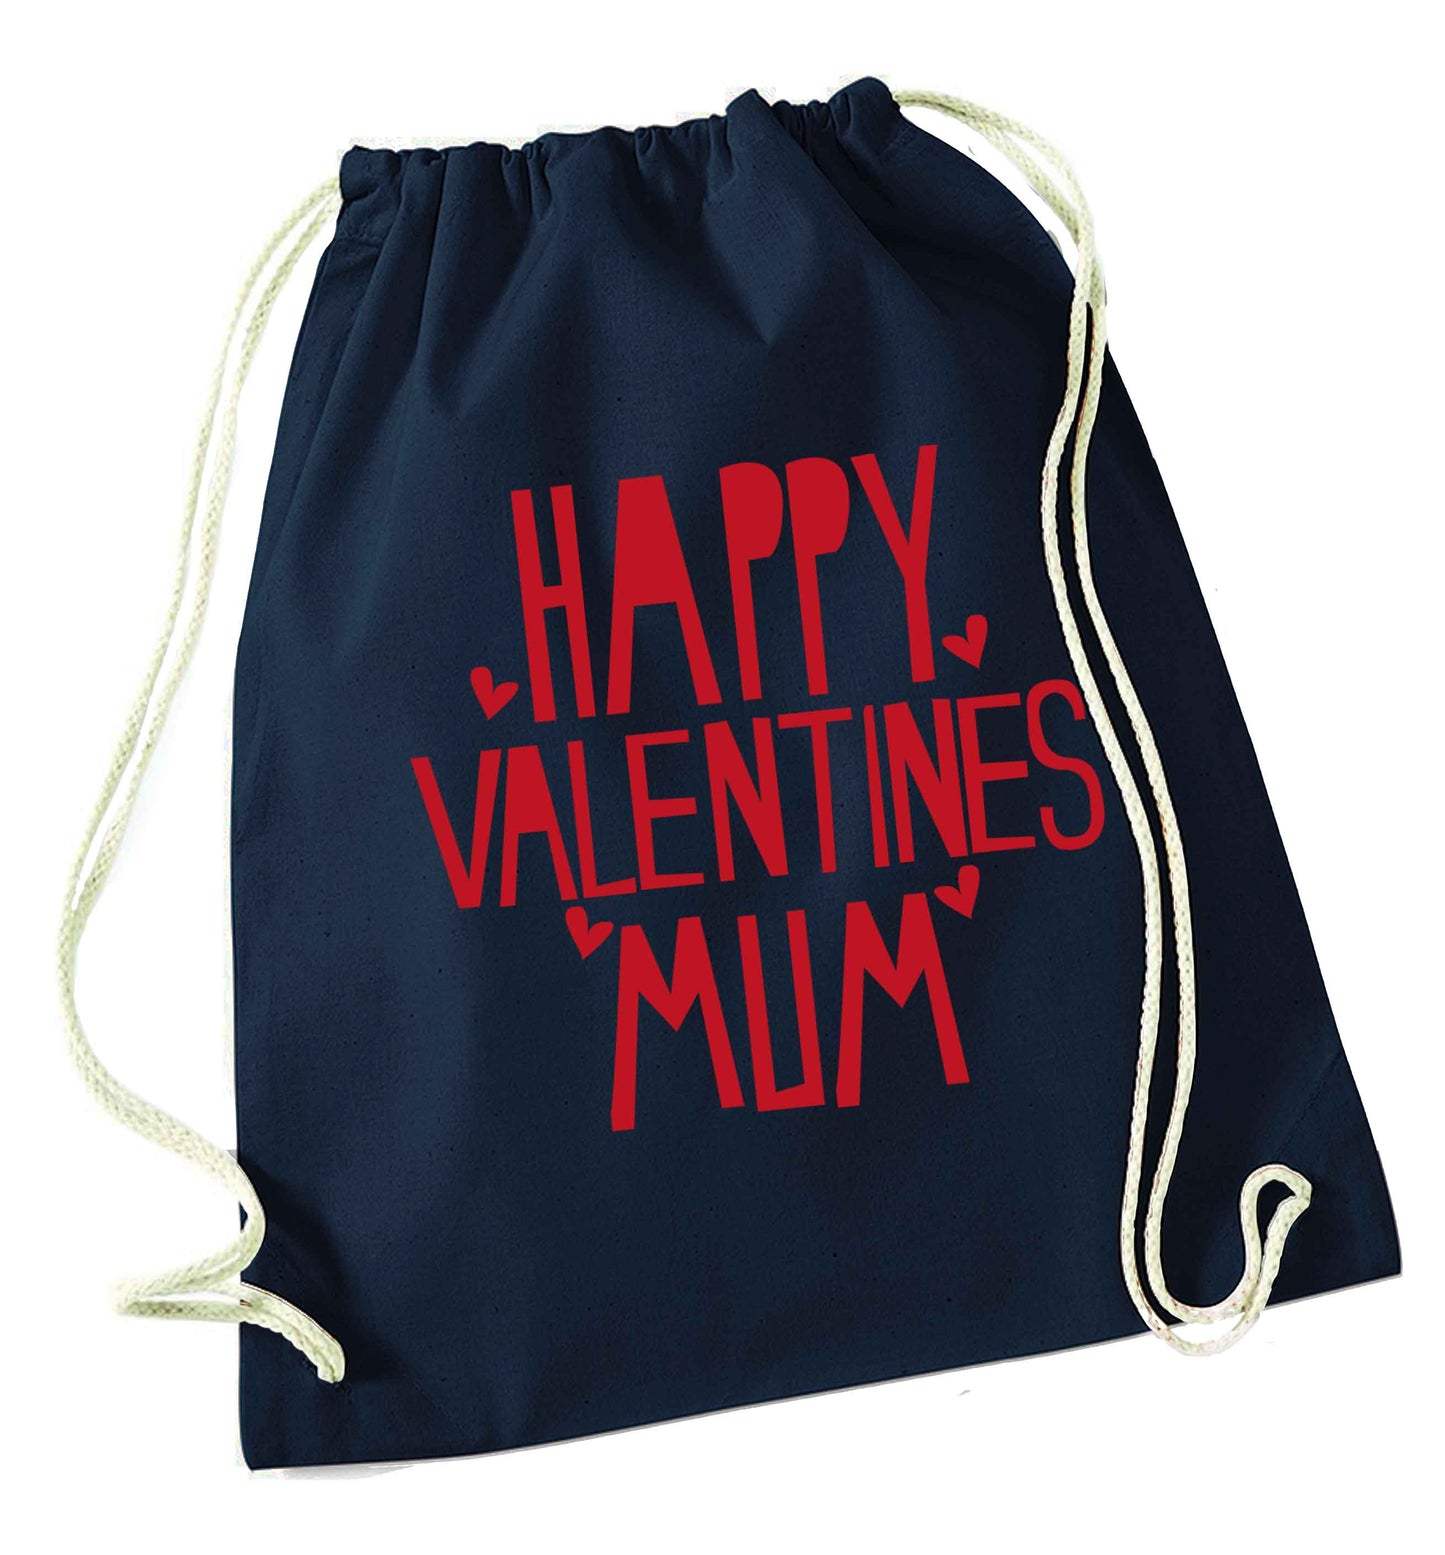 Happy valentines mum navy drawstring bag